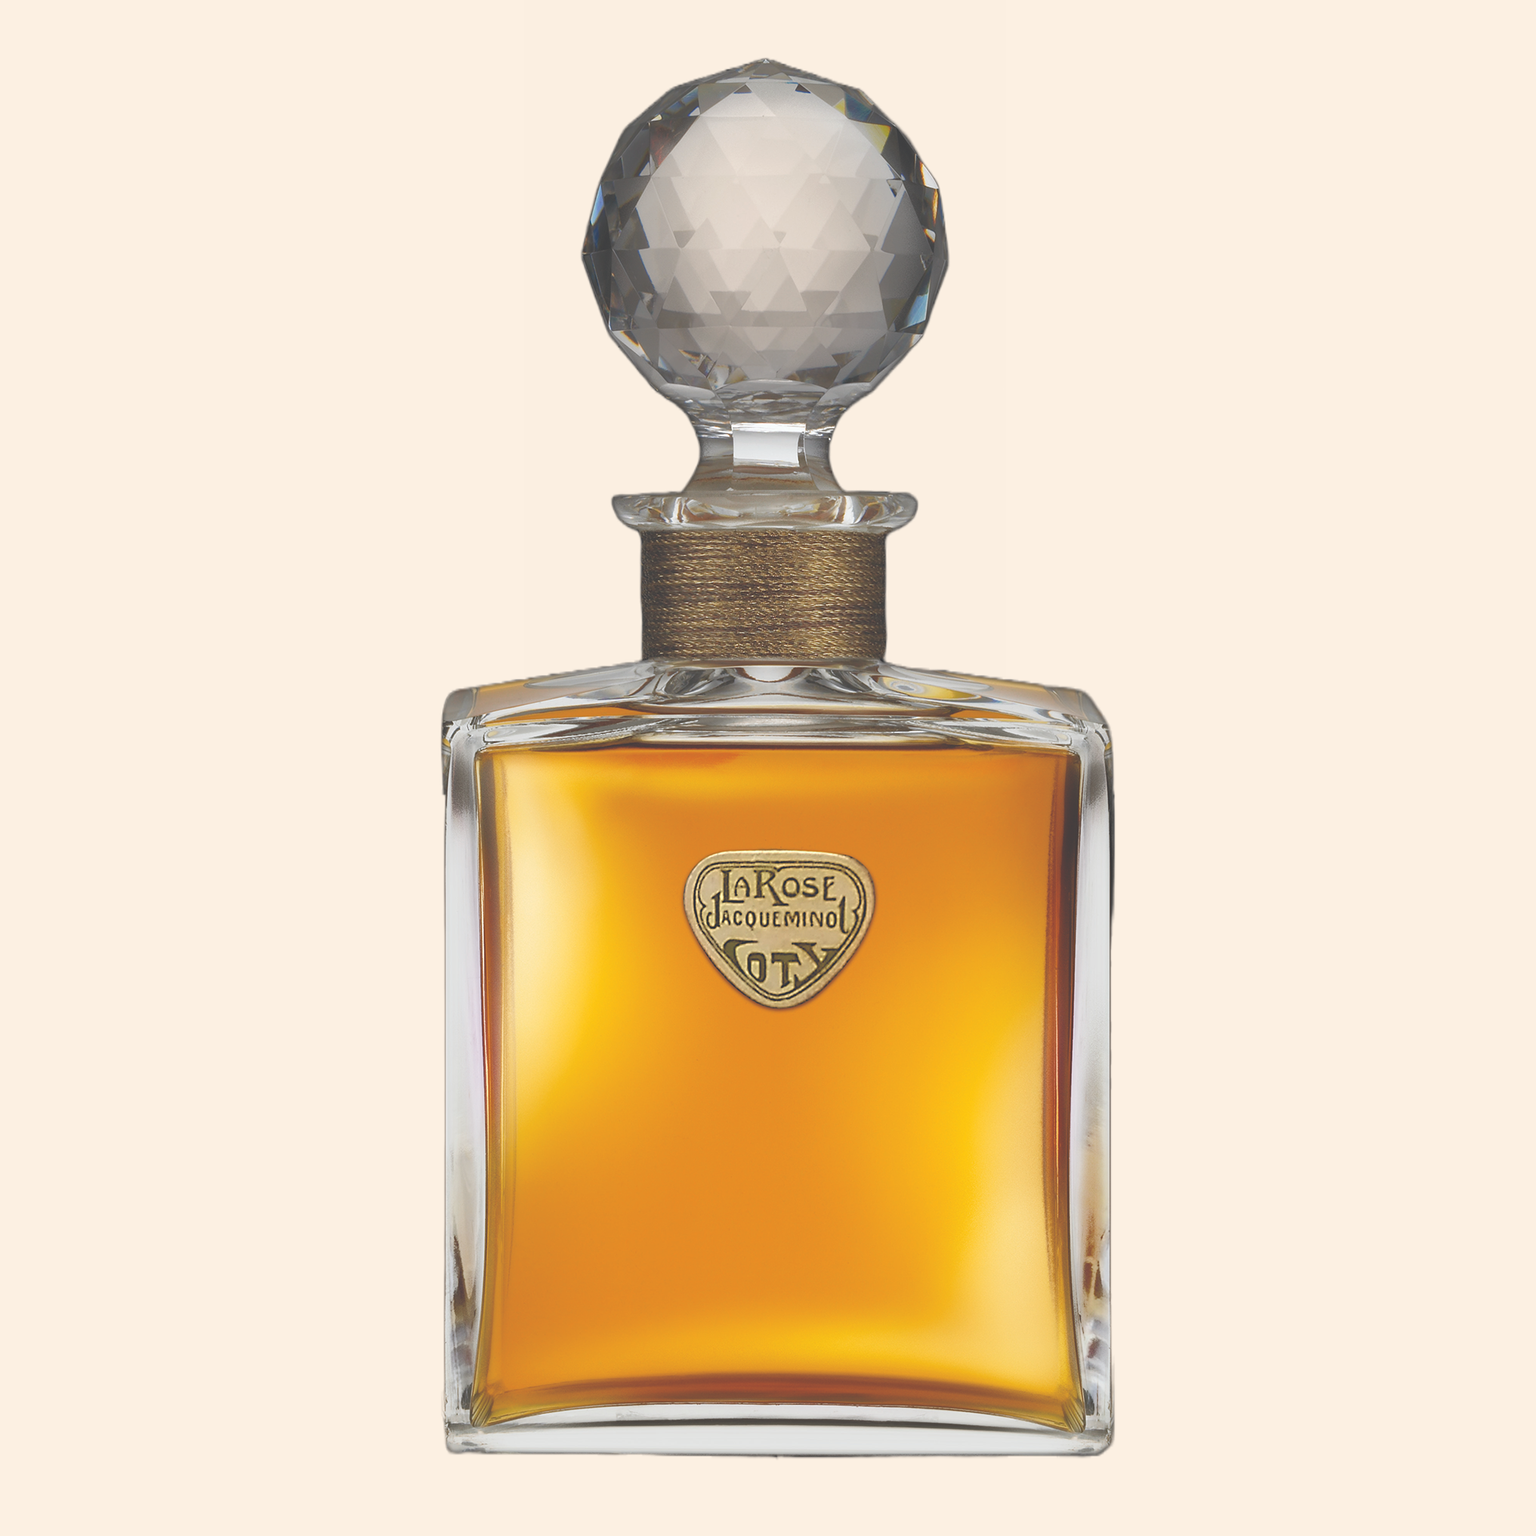 La Rose Jacqueminot perfume bottle